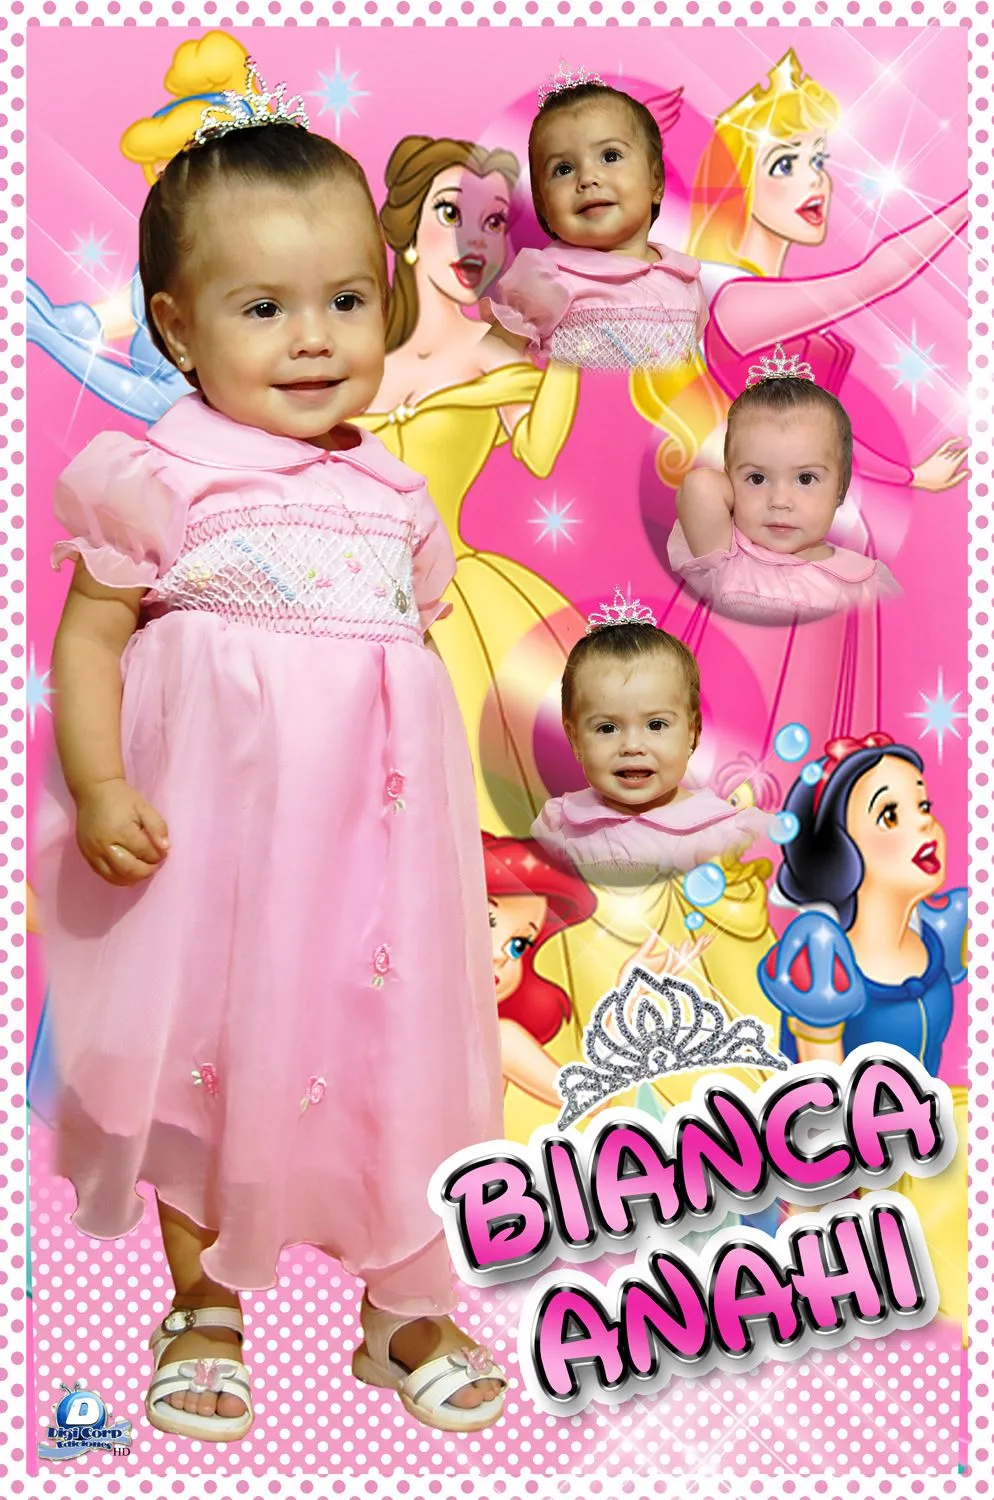 Digi Corp Ediciones: Banner Infantil Motivo princesas Bianca Anahi